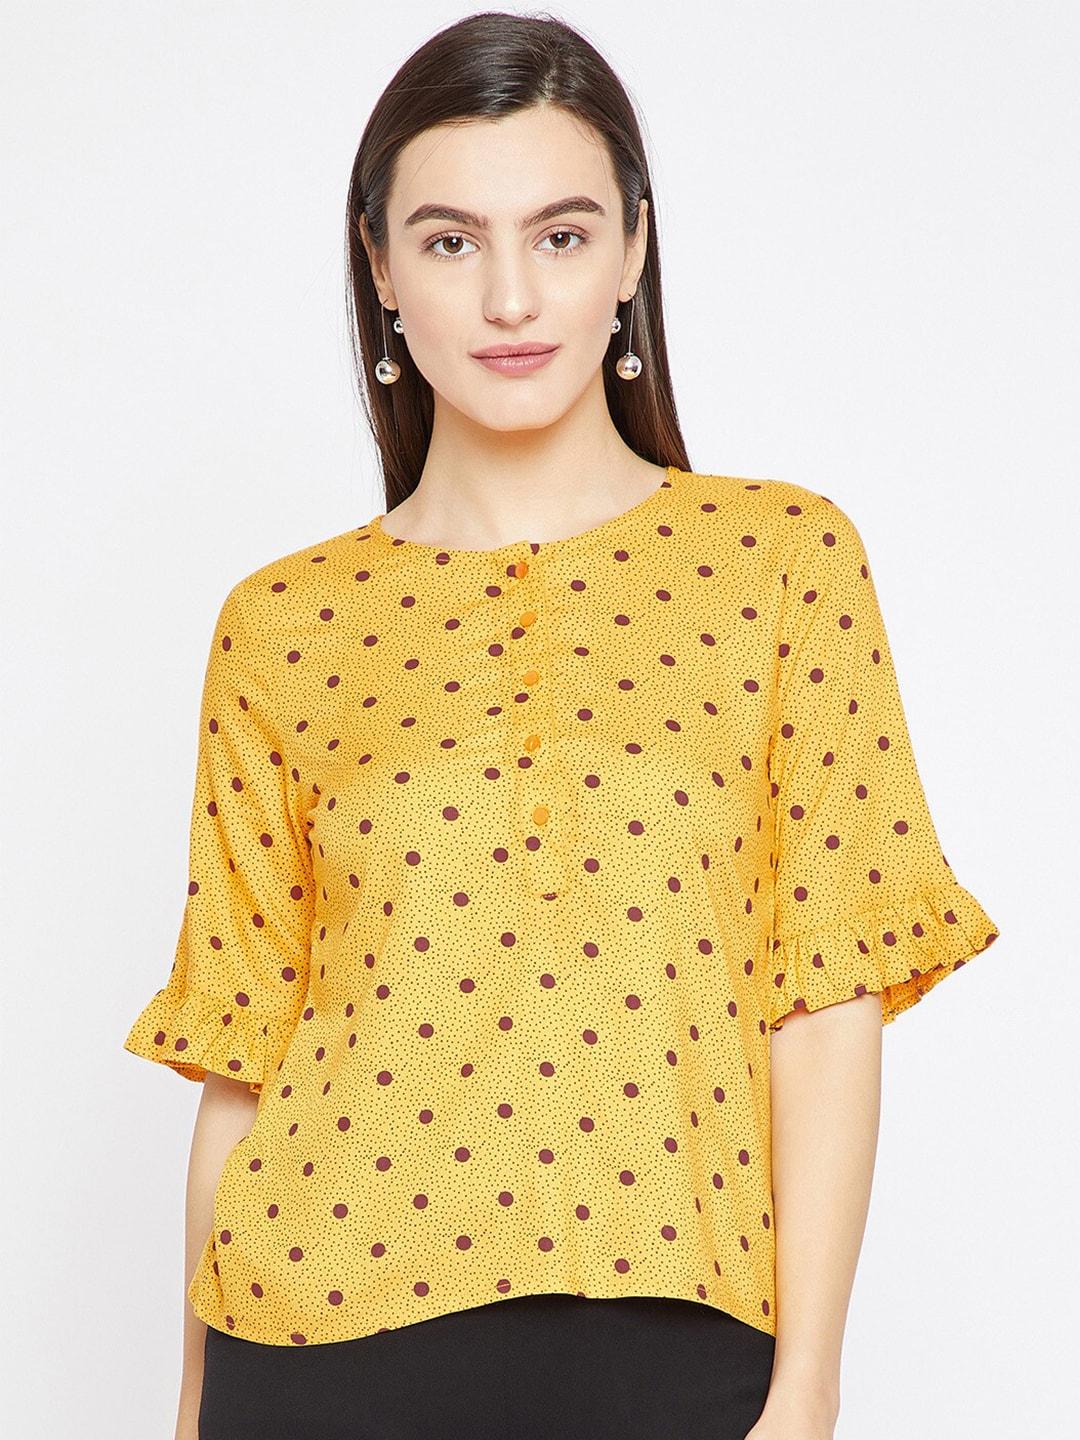 carlton-london-women-yellow-&-maroon-polka-dots-printed-round-neck-top